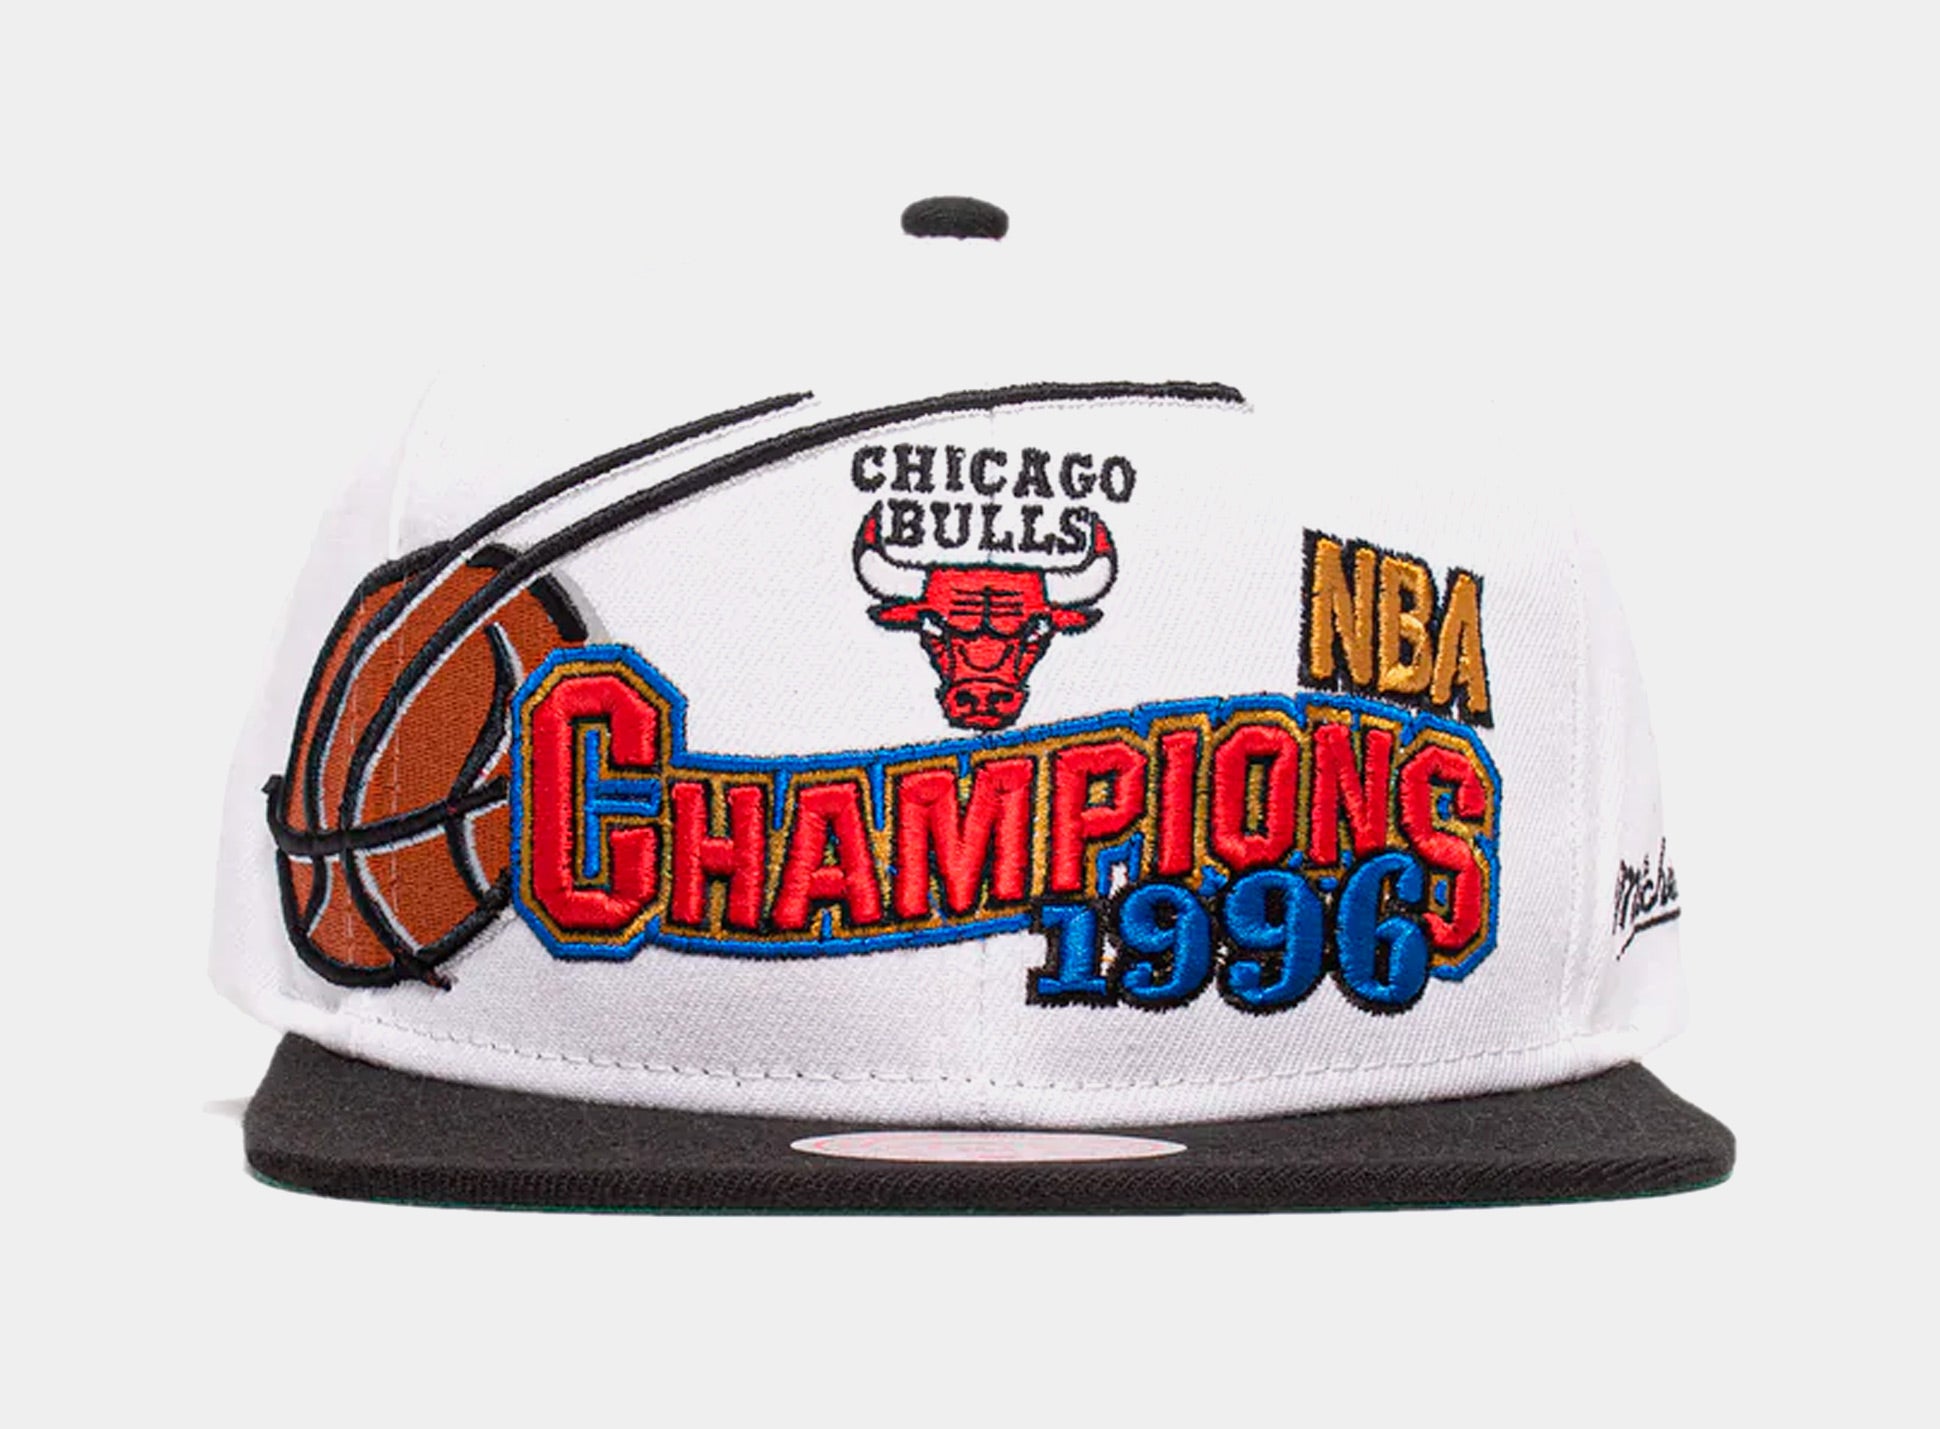 Mitchell & Ness Black NBA Chicago Bulls 97 Champions HWC Snapback